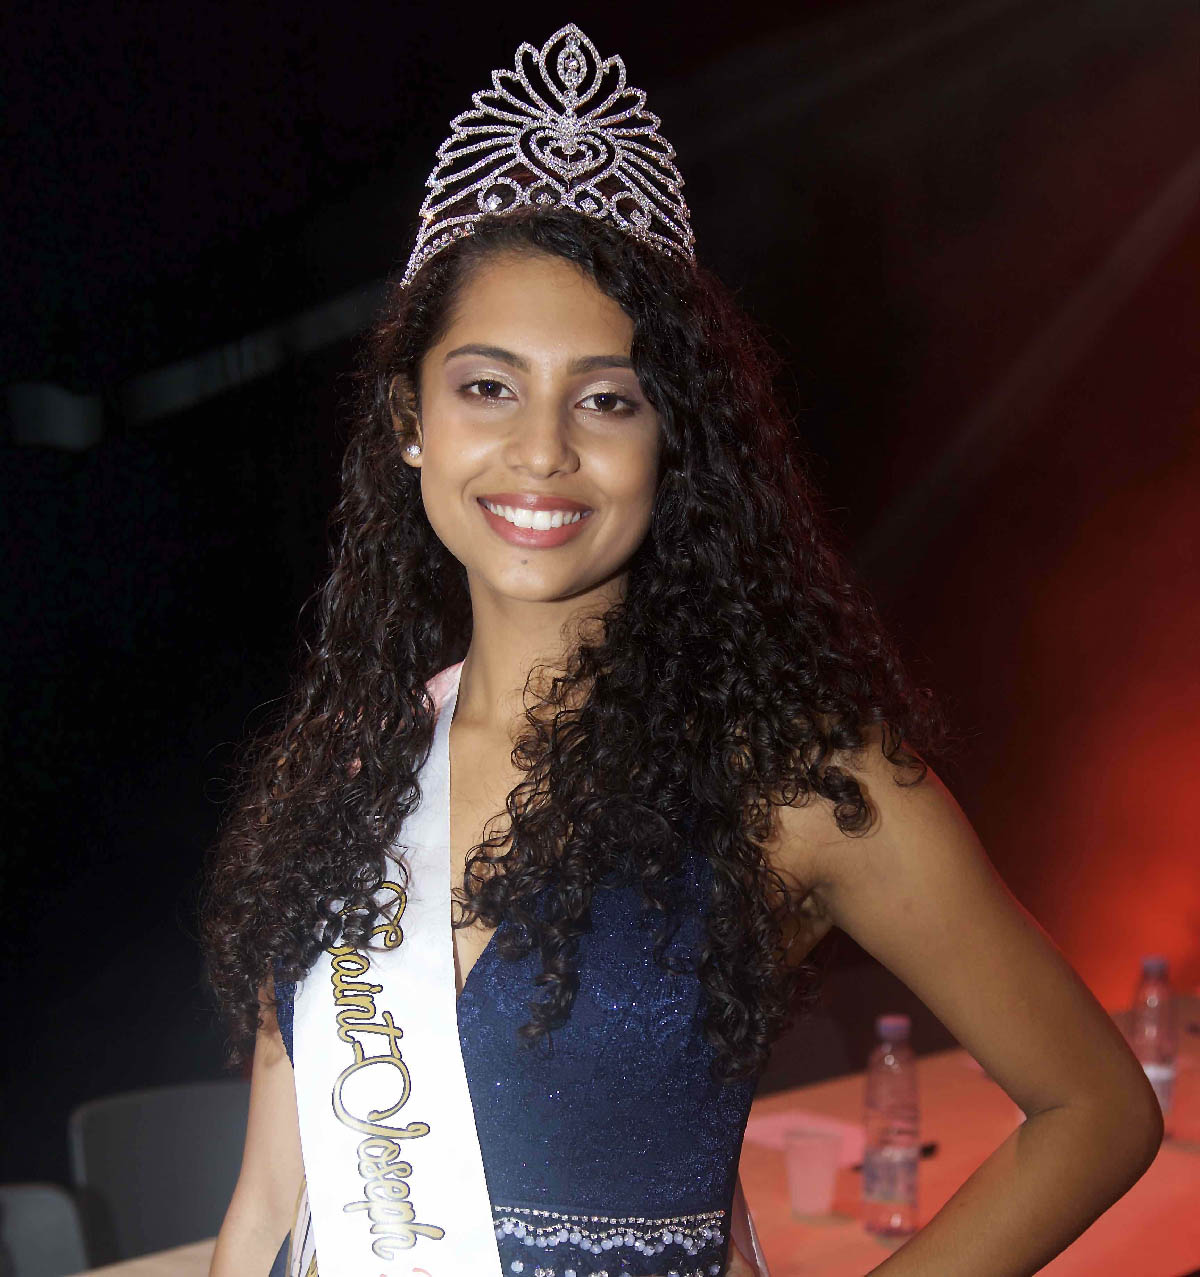 Mélodie Aupin, Miss Saint-Joseph 2019